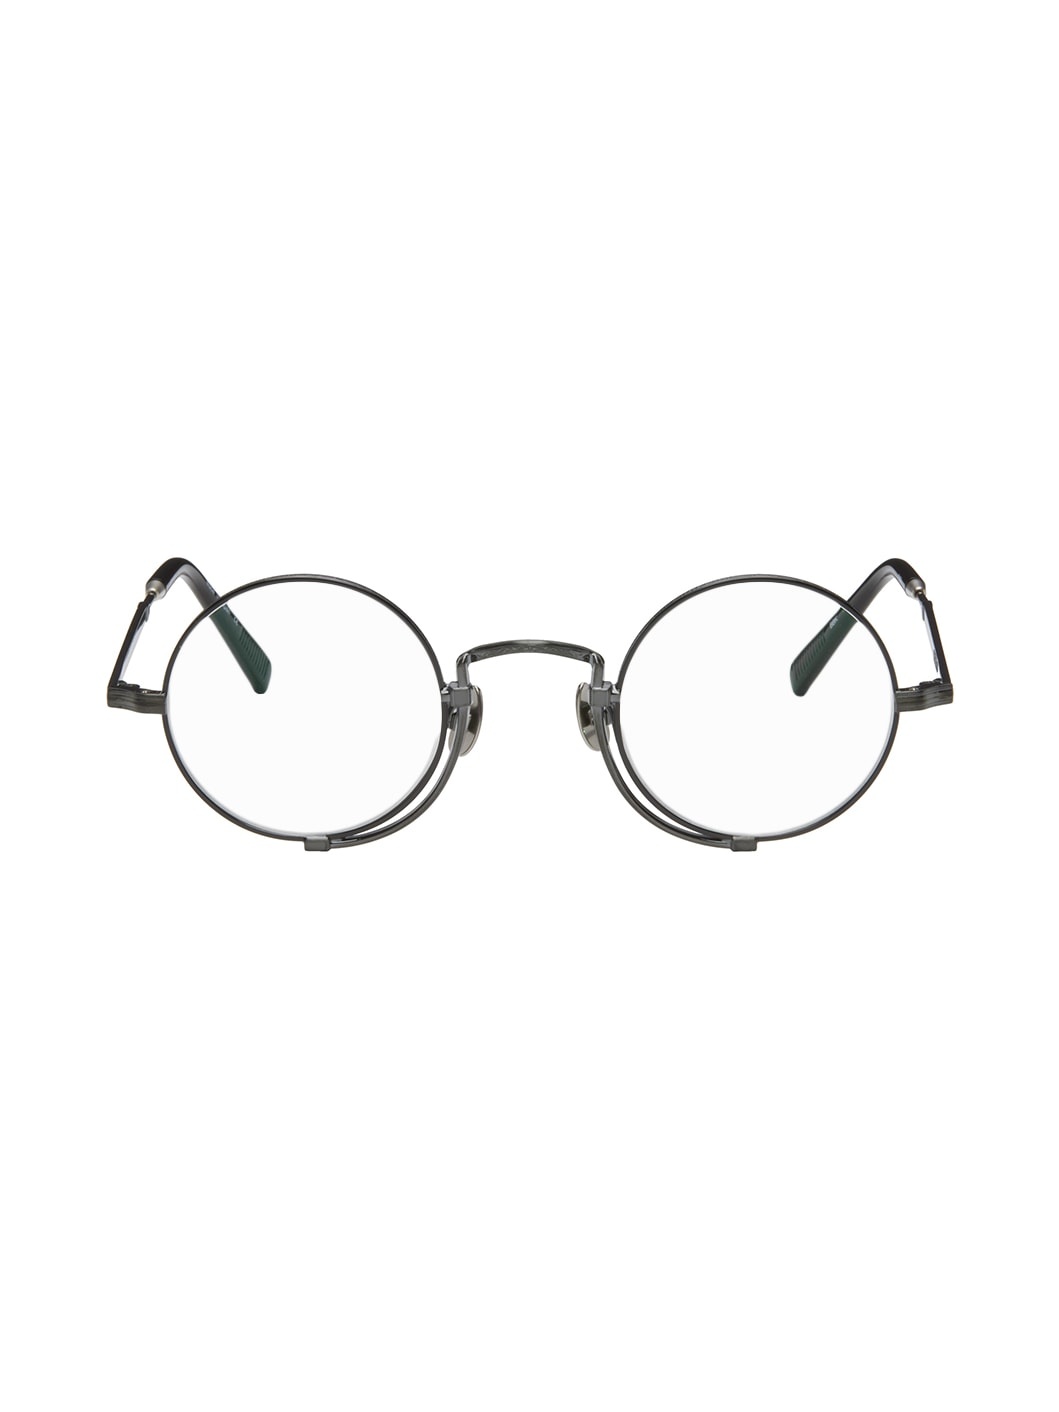 Black Morgenthal Frederics Edition Lifesaver Glasses - 1